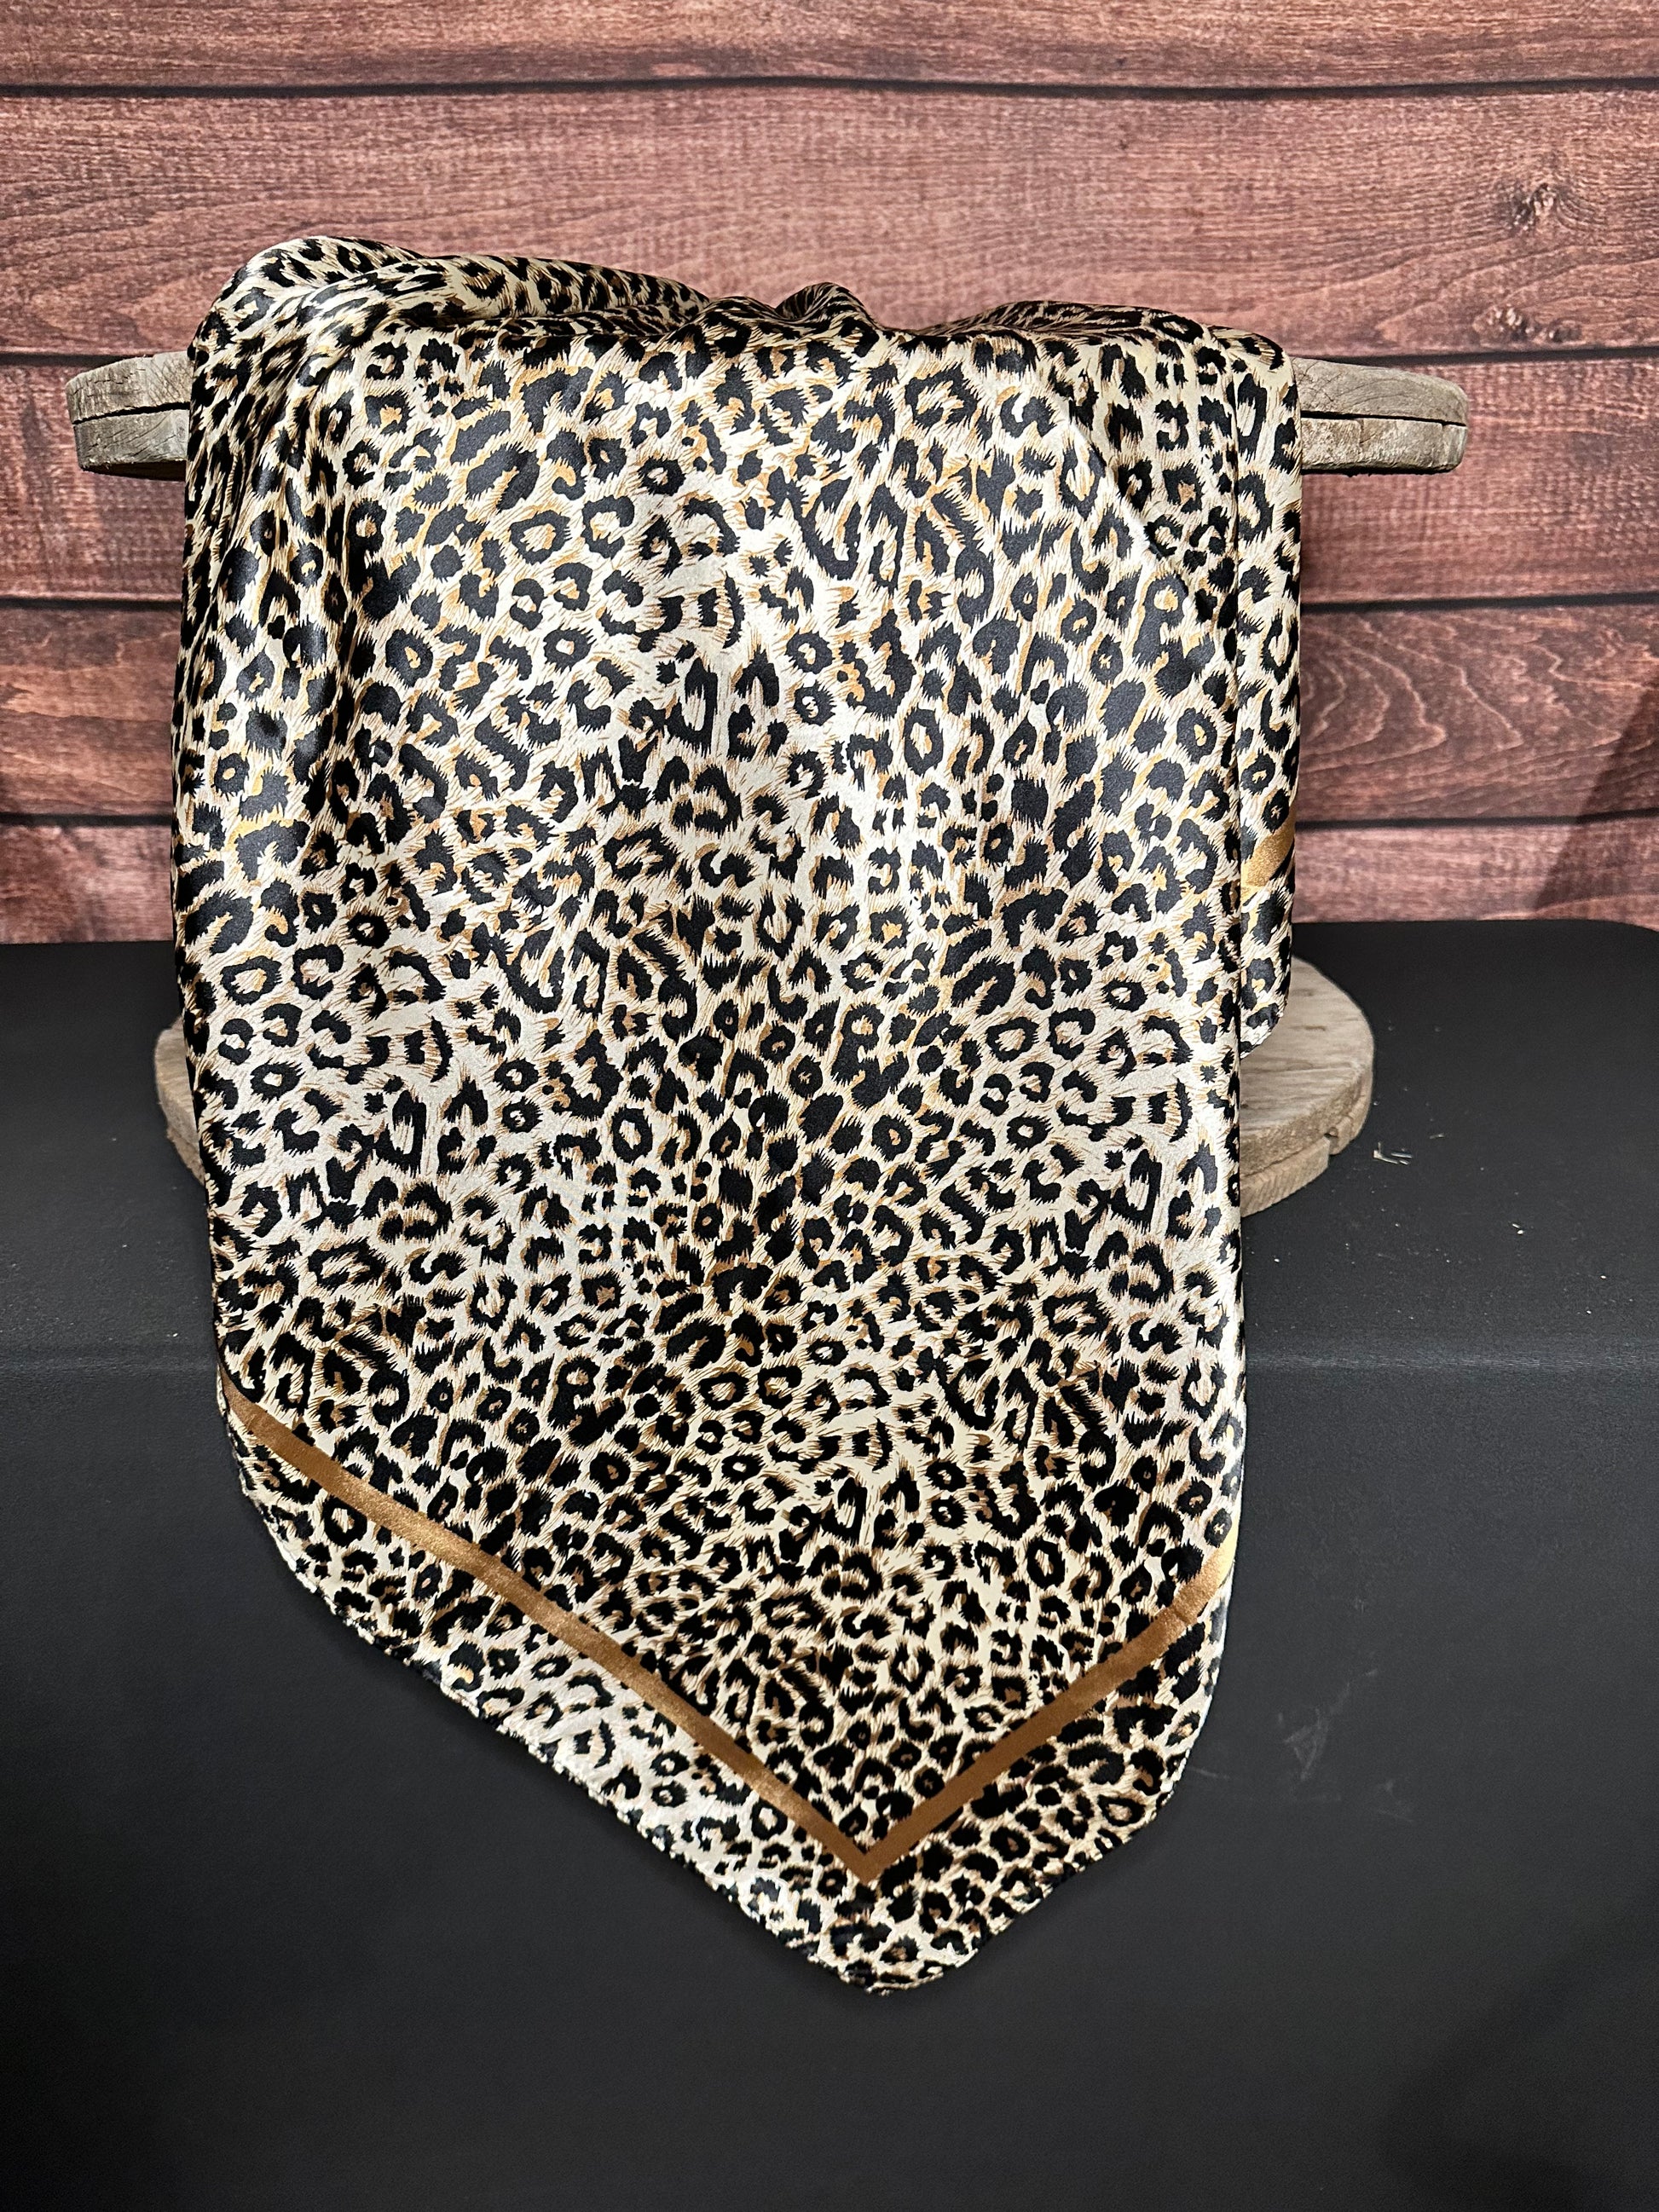 Liberty Leopard Wild Rag: leopard print silk wild rag with gold border 